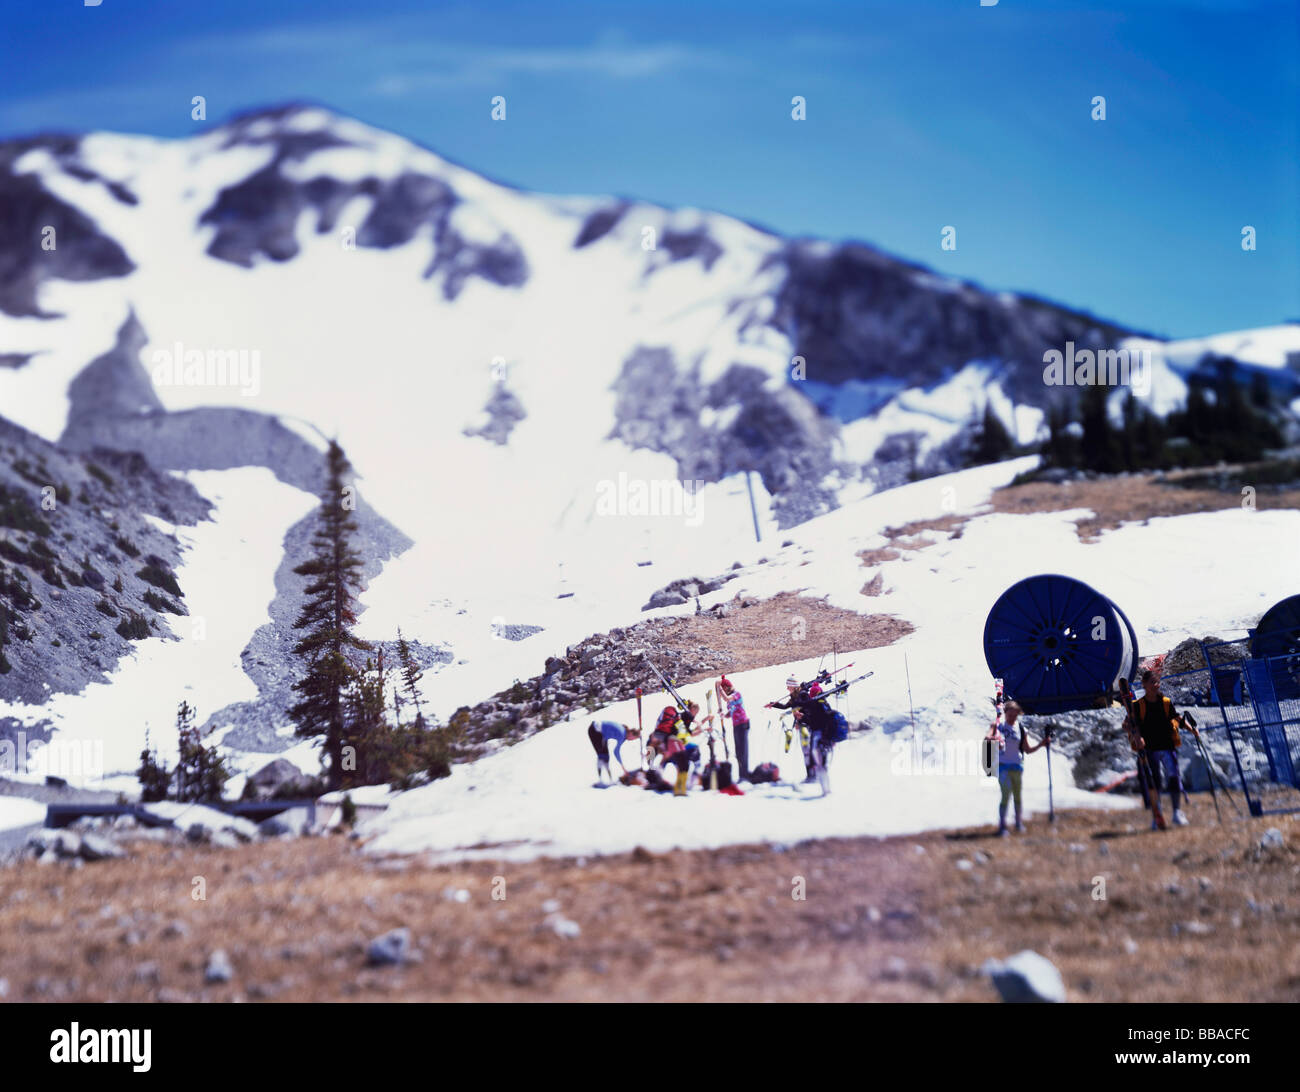 A ski resort, Whistler, British Columbia, Canada, tilt-shift photography Stock Photo